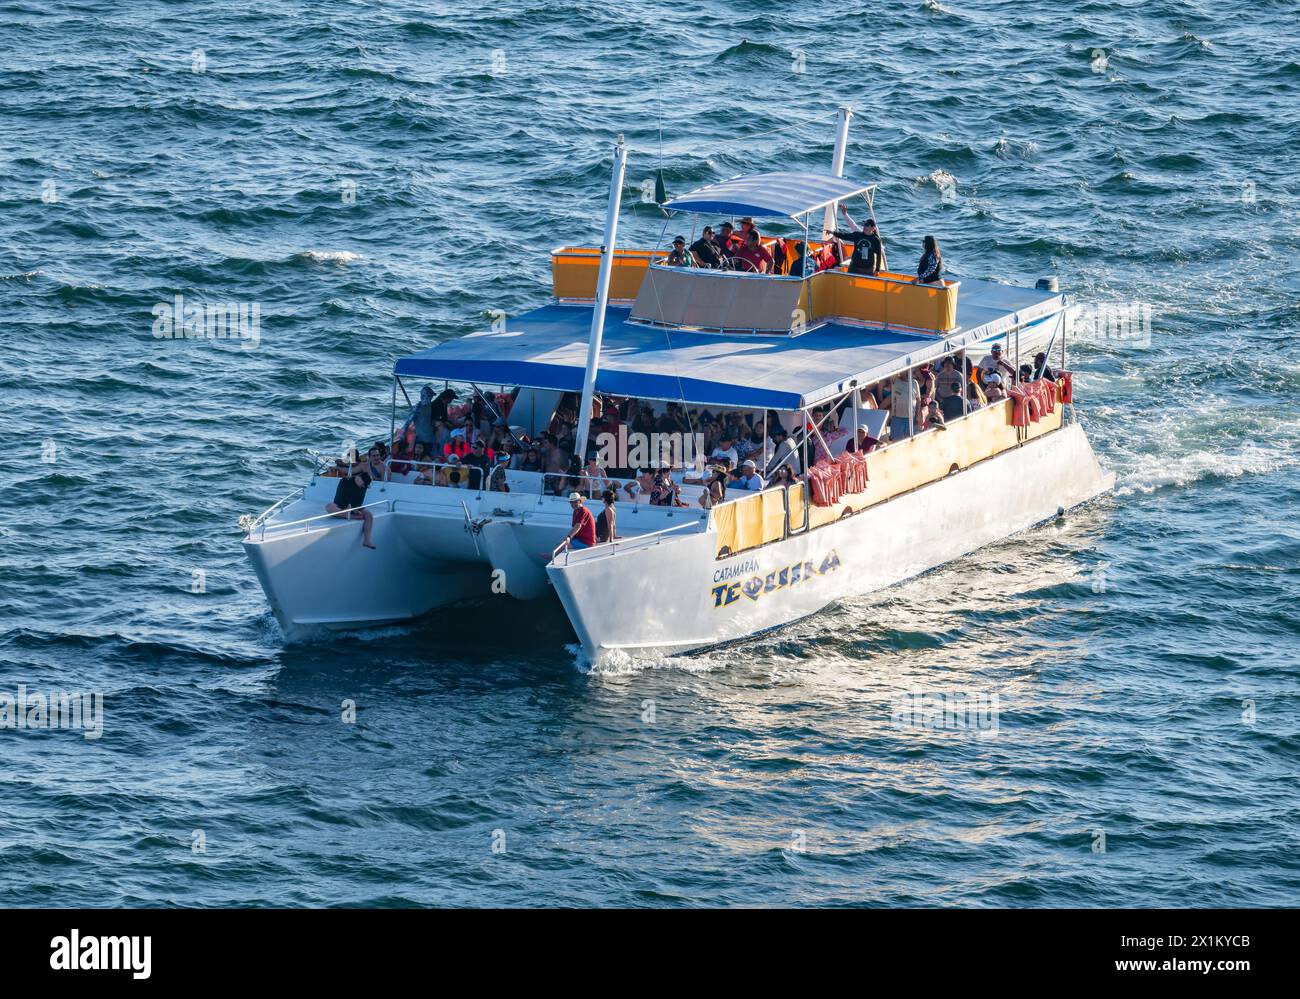 Tourists on a boat off the coast of Oaxaca, Mexico. Stock Photo